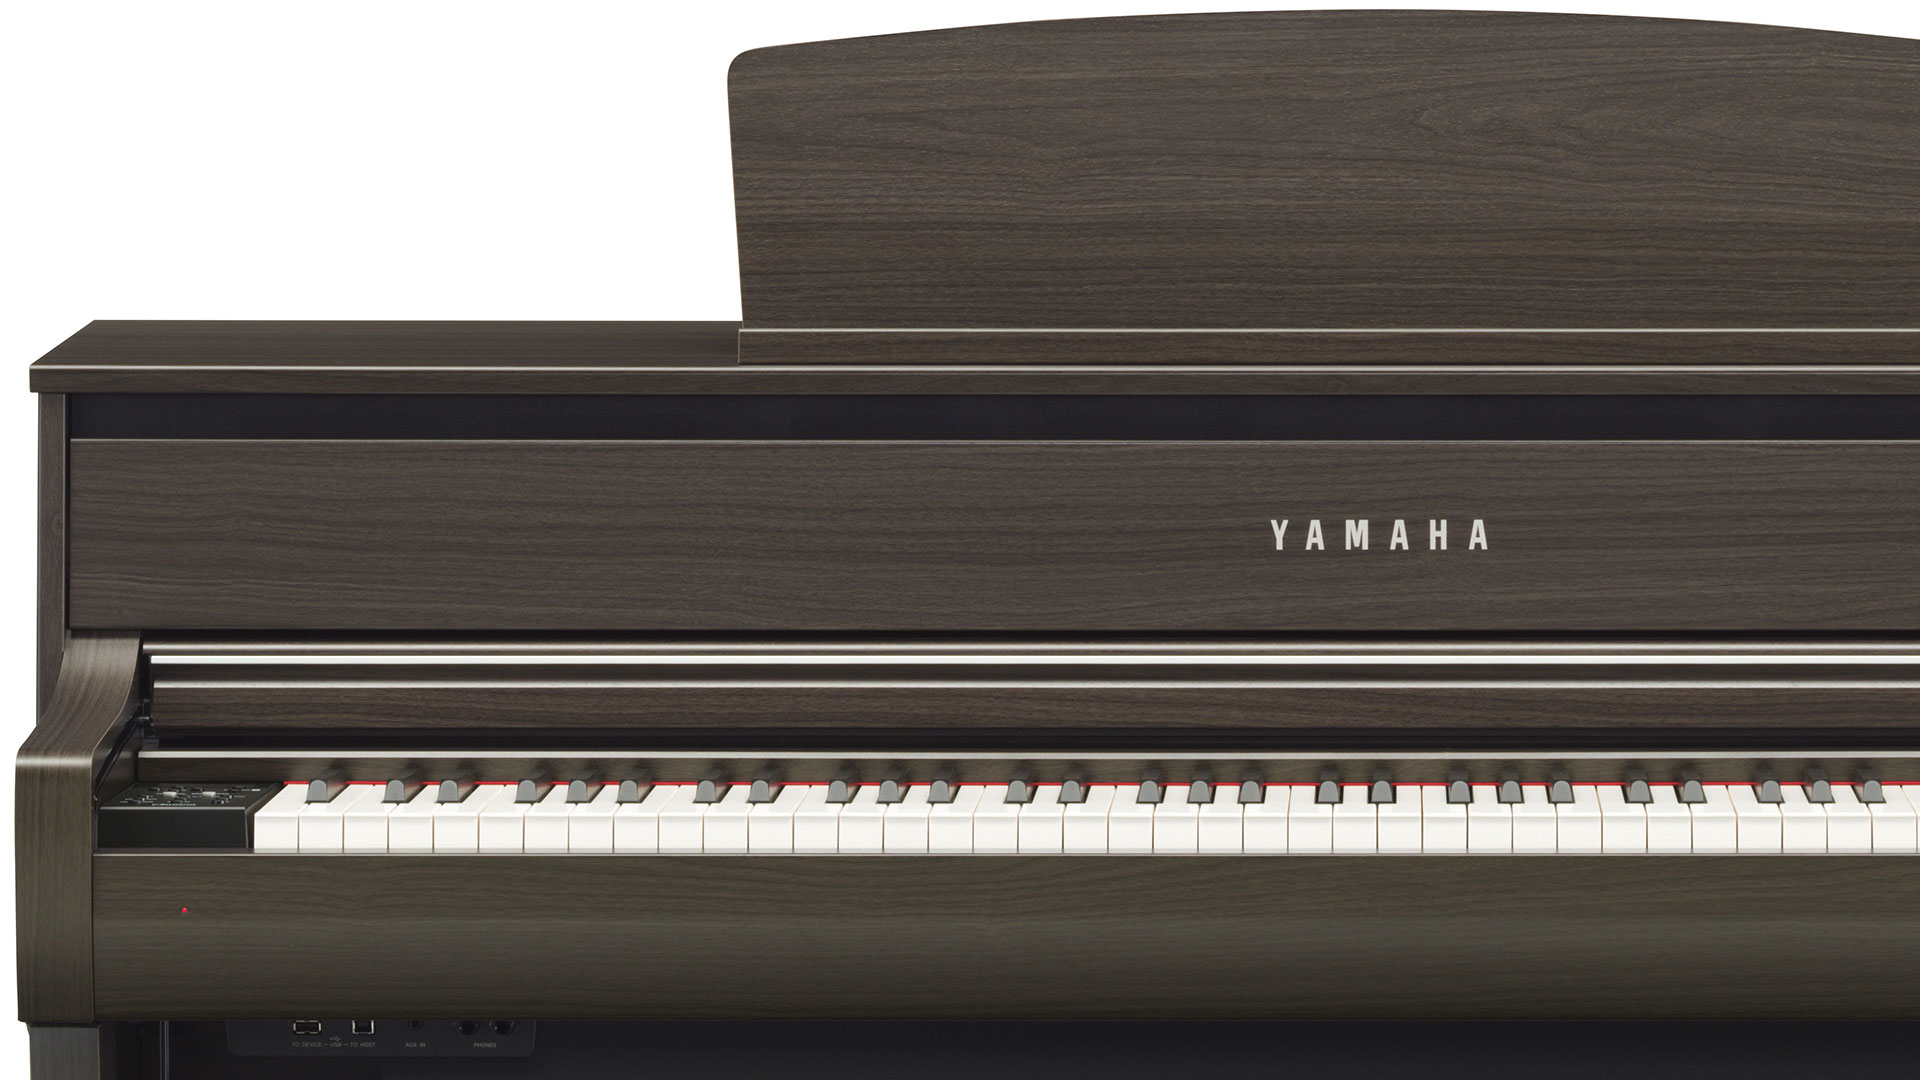 review piano điện Yamaha CLP-675